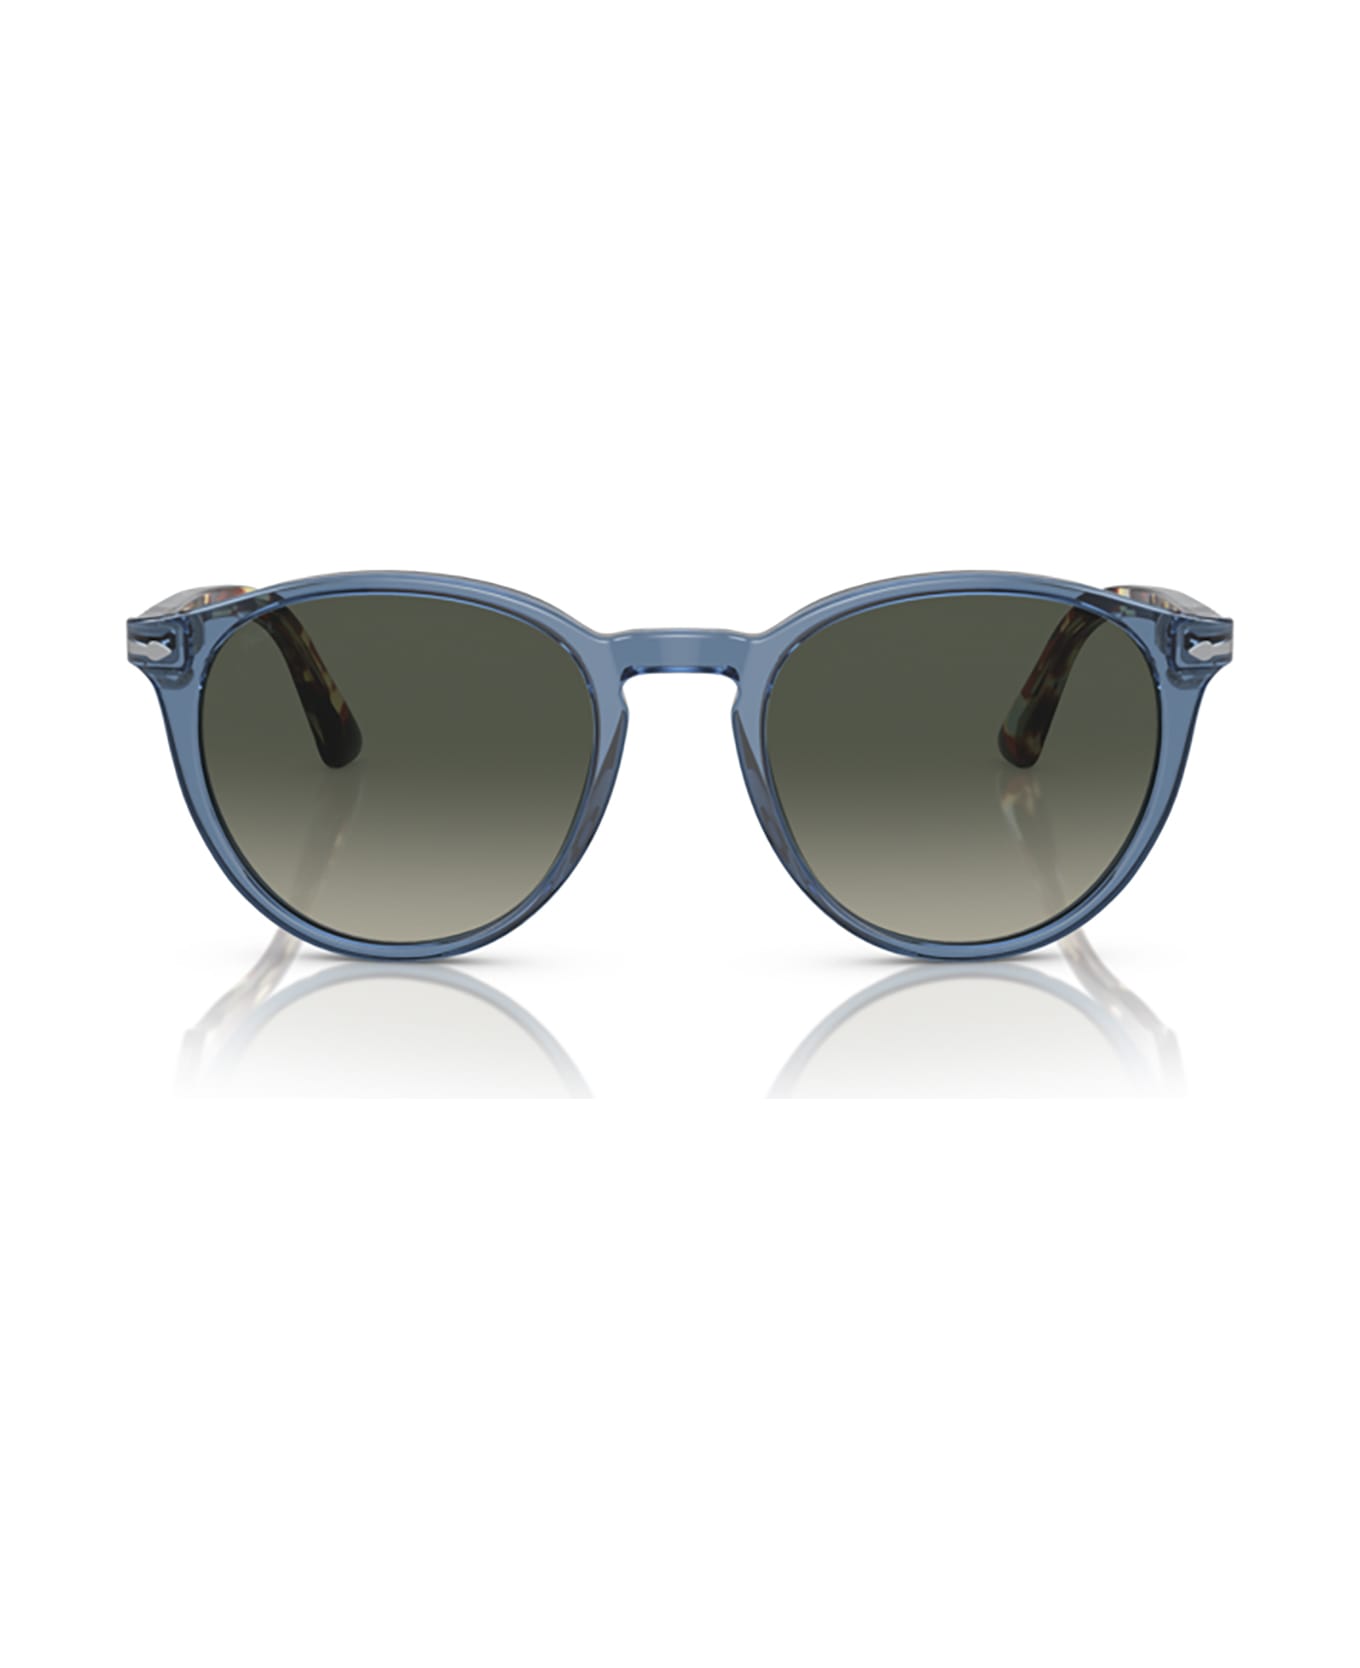 Persol Po3152s Transparent Navy Sunglasses - Transparent Navy